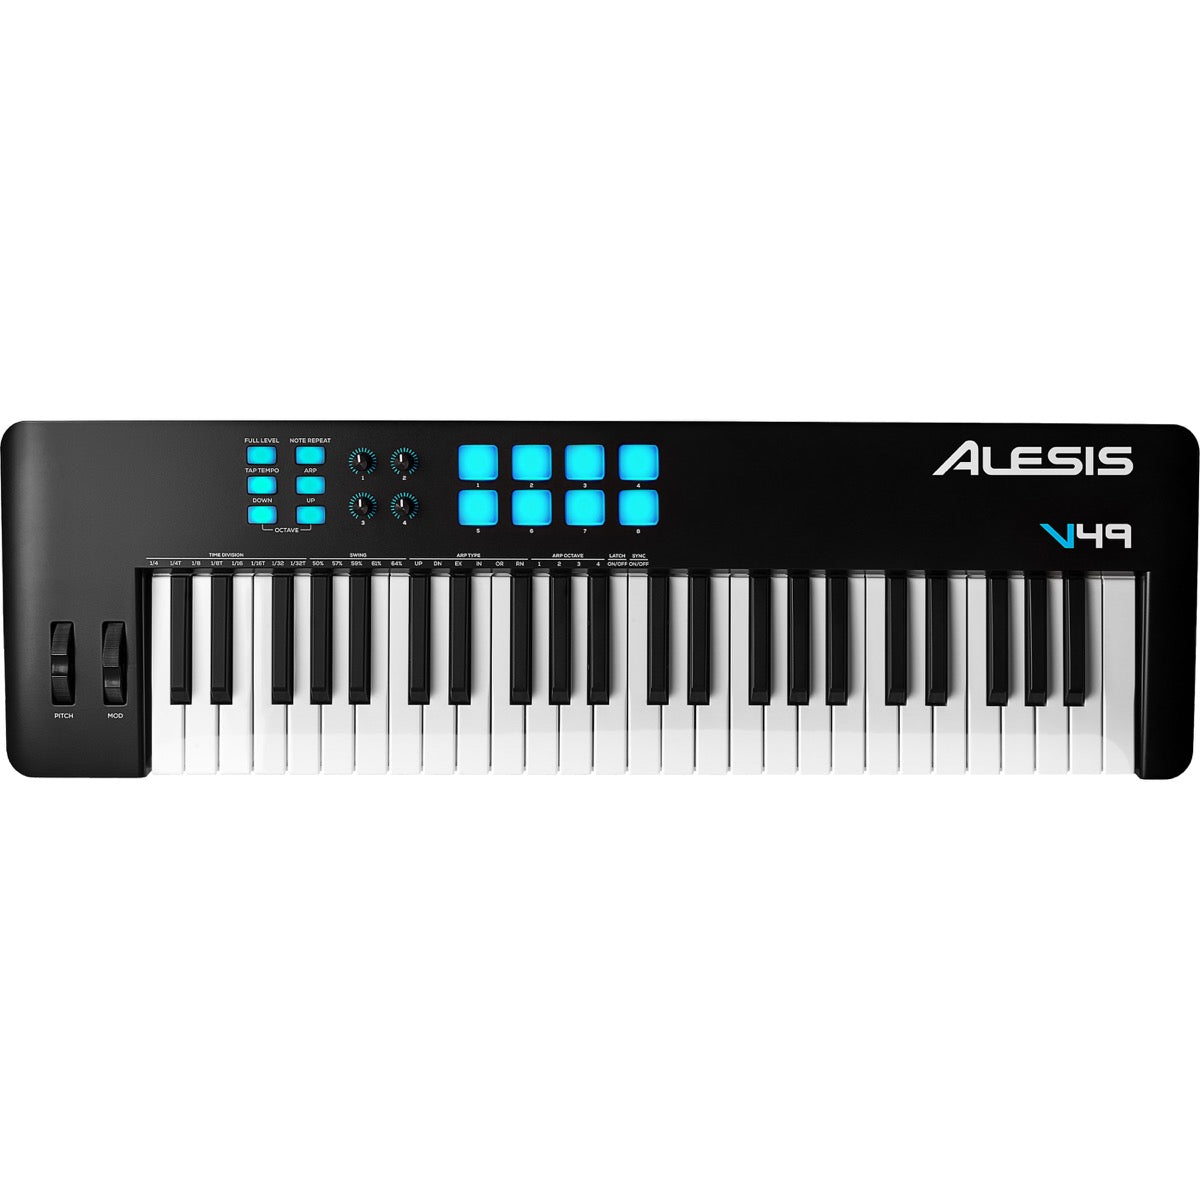 Alesis V49 MKII 49-Key USB-MIDI Keyboard Controller View 1